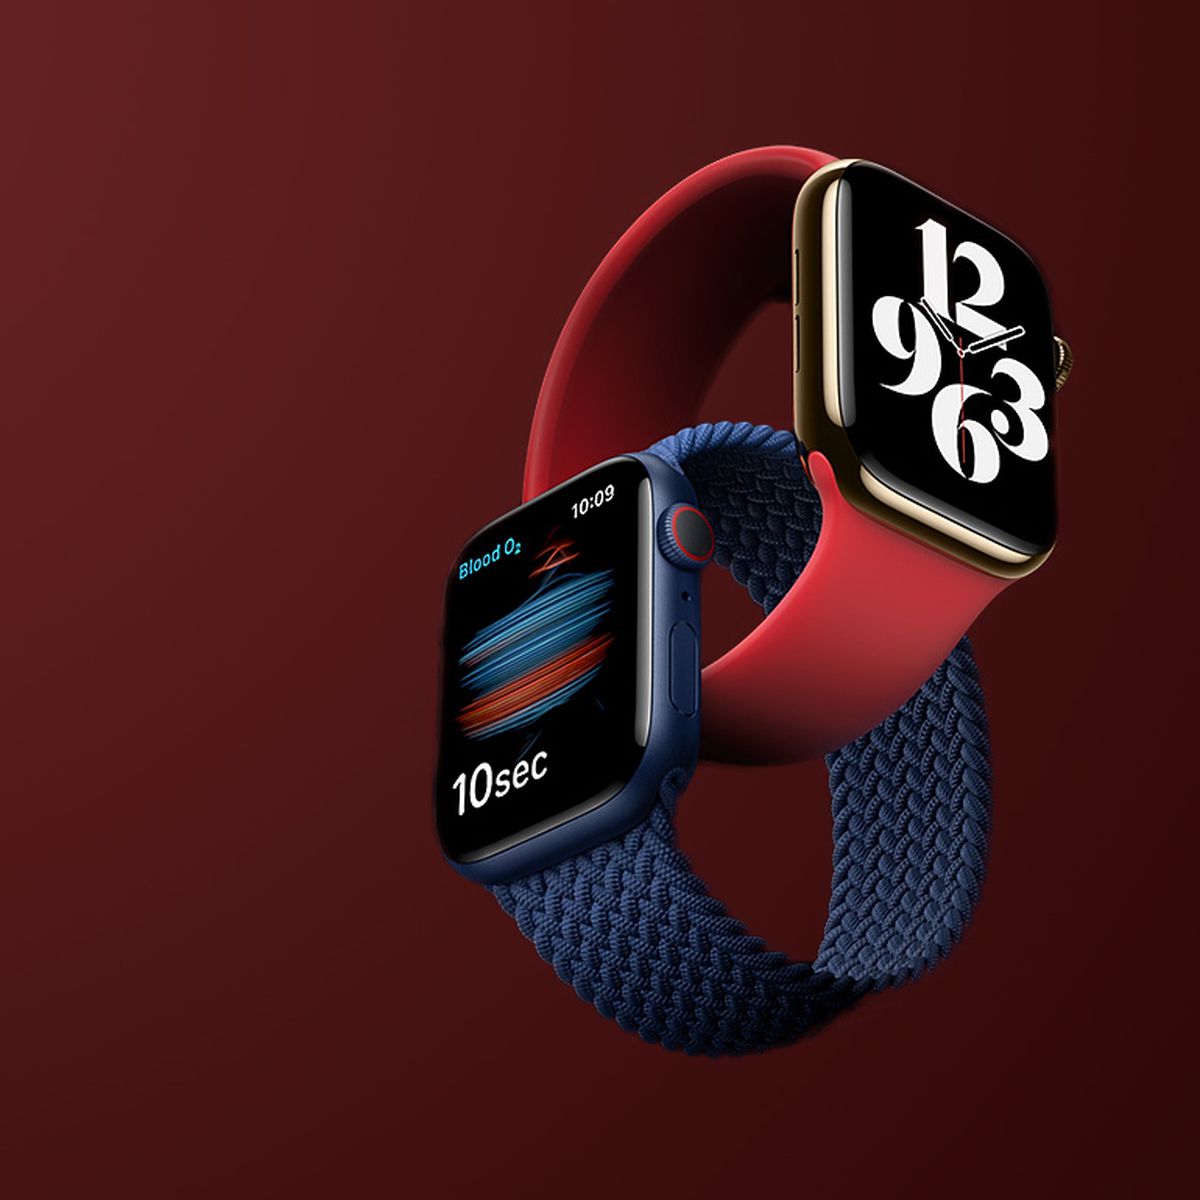 https://images.macrumors.com/t/IEfuepzU6y59FWbdoF3Tbfhvp7s=/1200x1200/smart/article-new/2021/09/Apple-Watch-6-red-Feature.jpg